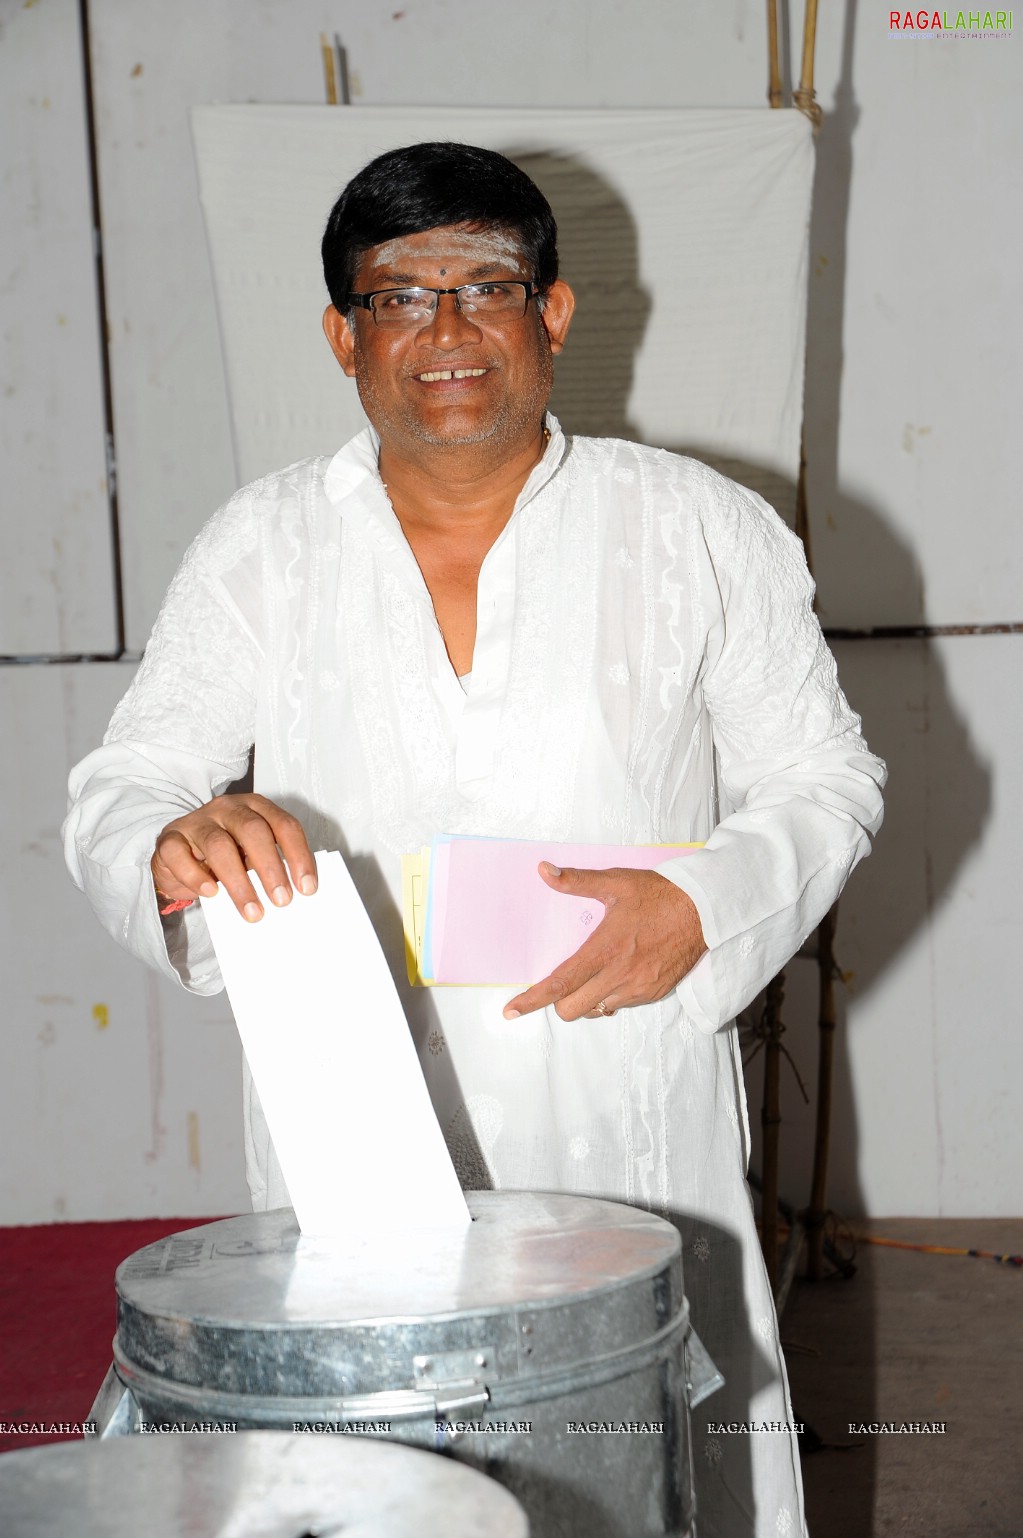 MAA Elections 2010